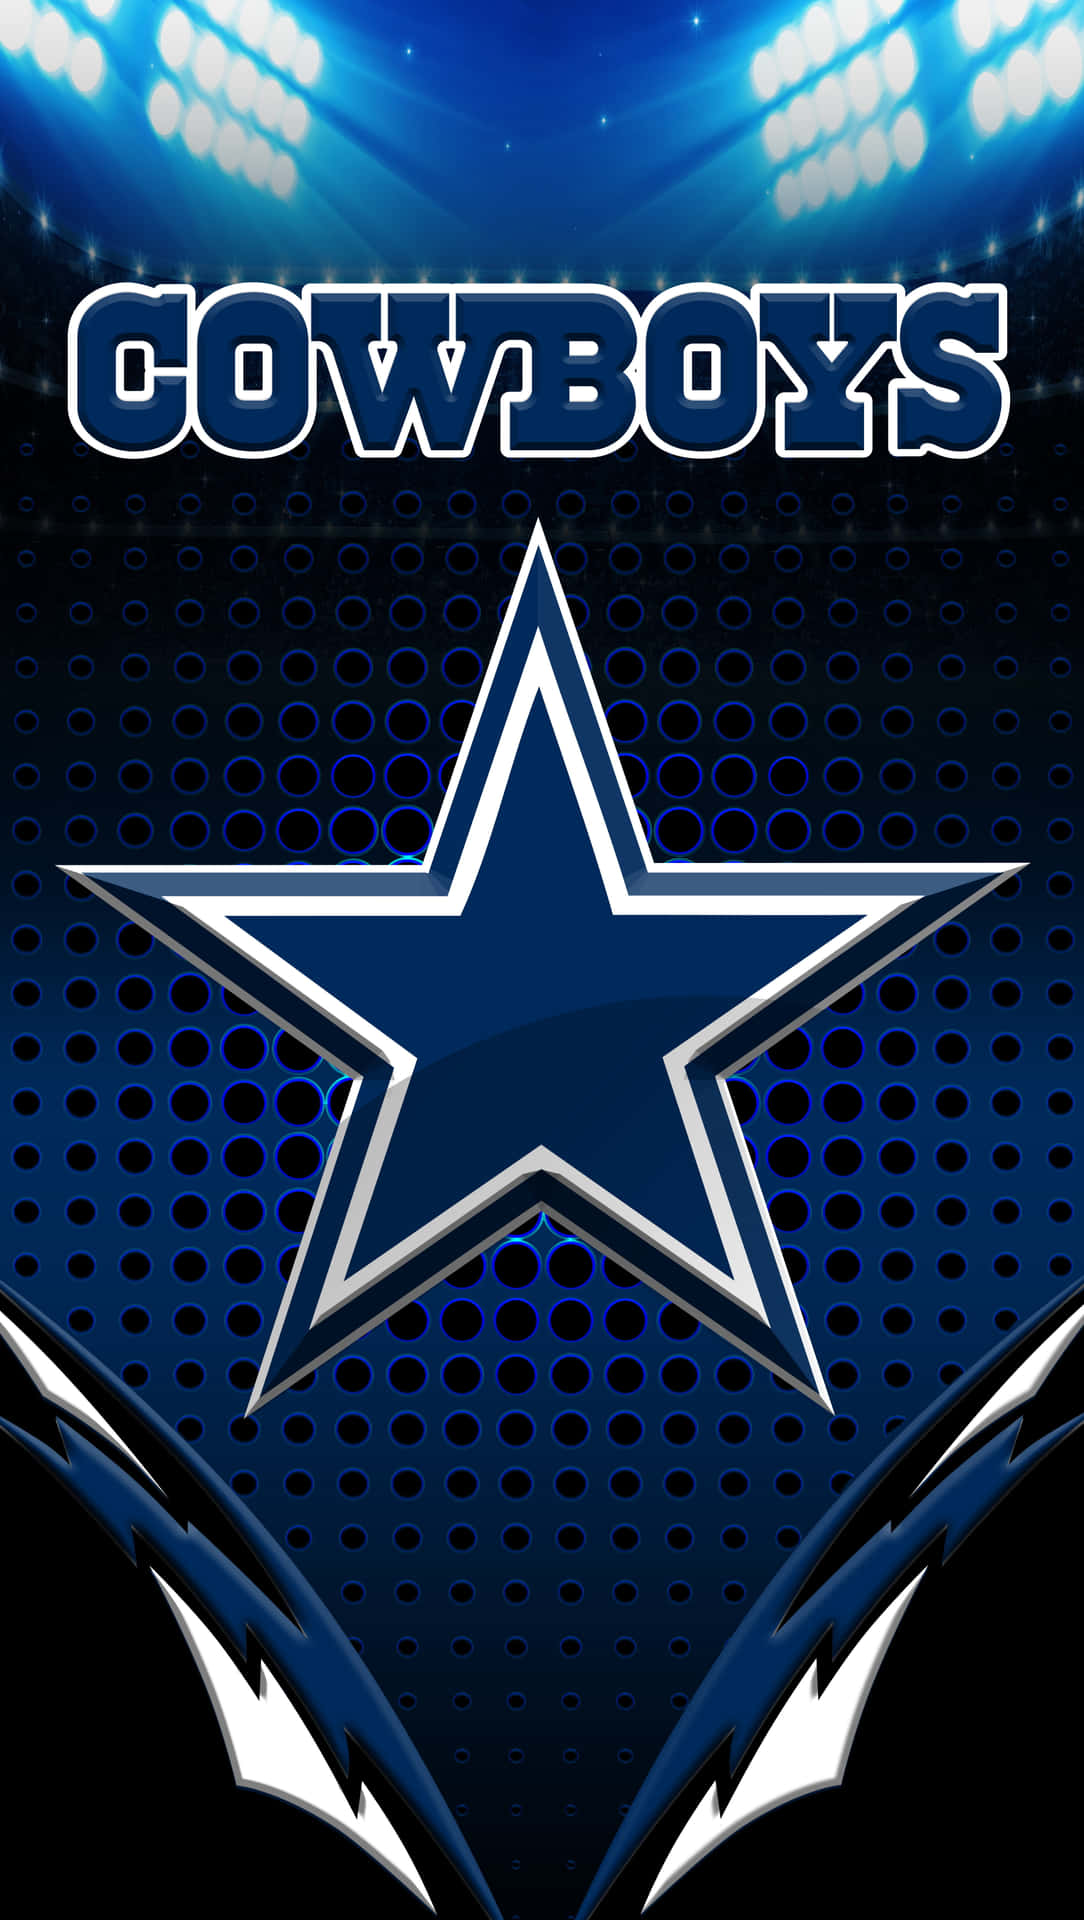 Free download Pin by T Sanchez on Dallas Cowboys Pinterest 540x783 for  your Desktop Mobile  Tablet  Explore 49 Dallas Cowboys Wallpaper and  Screensavers  Dallas Cowboys Backgrounds Dallas Cowboys Background